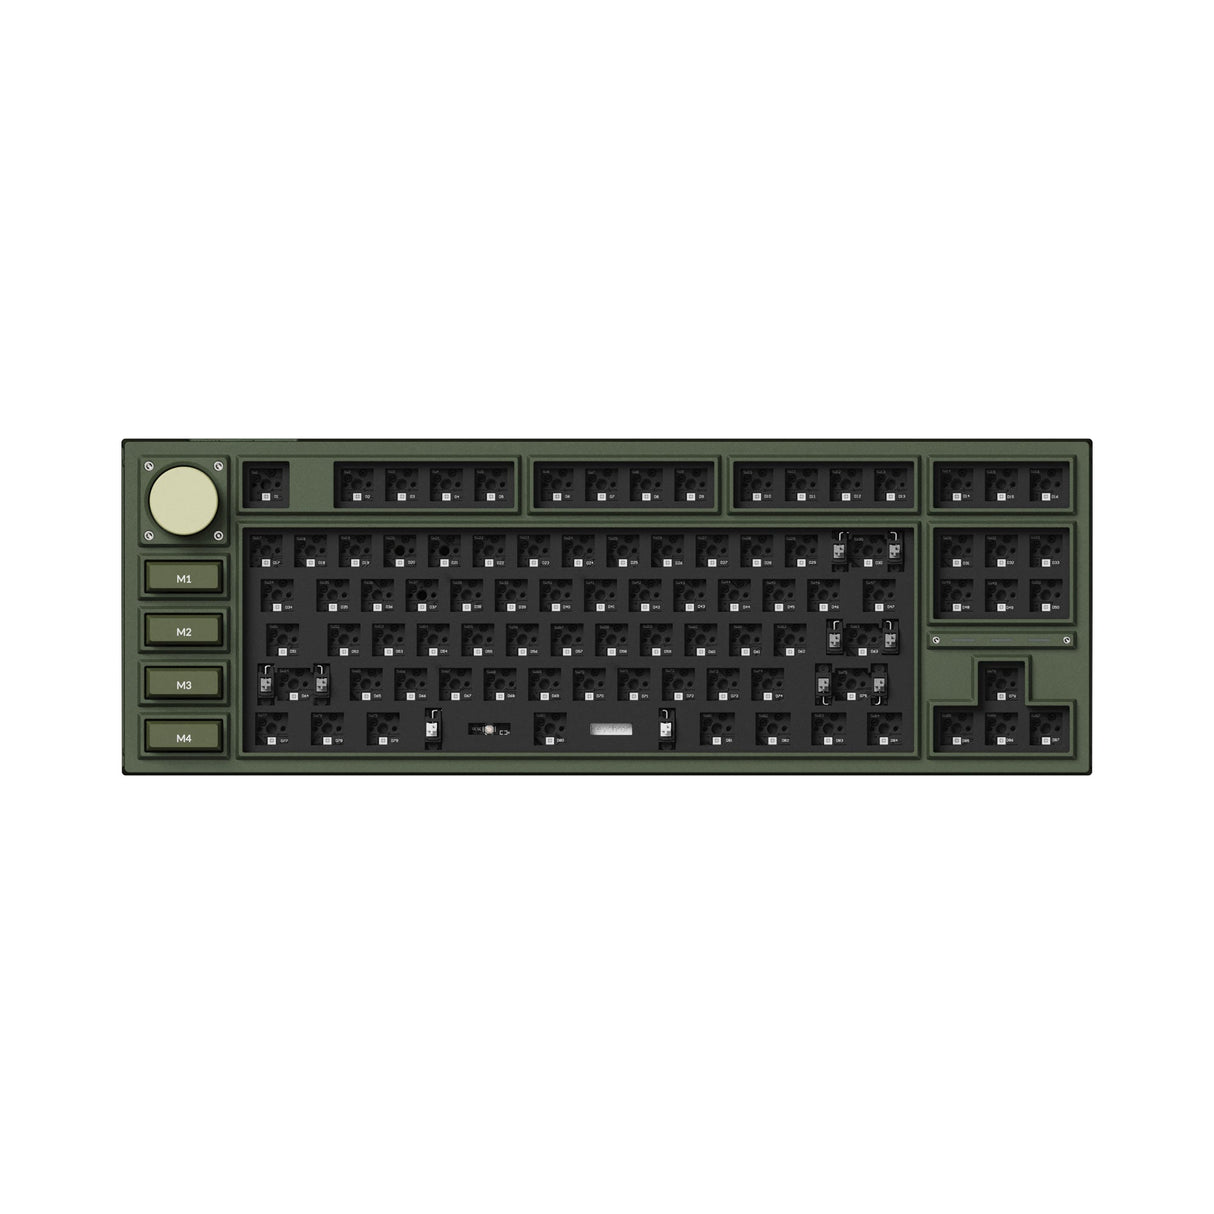 Keychron Q3 Pro QMK/VIA wireless custom mechanical keyboard tenkeyless layout full aluminum special edition green frame for Mac Windows Linux RGB hot-swappable barebone knob